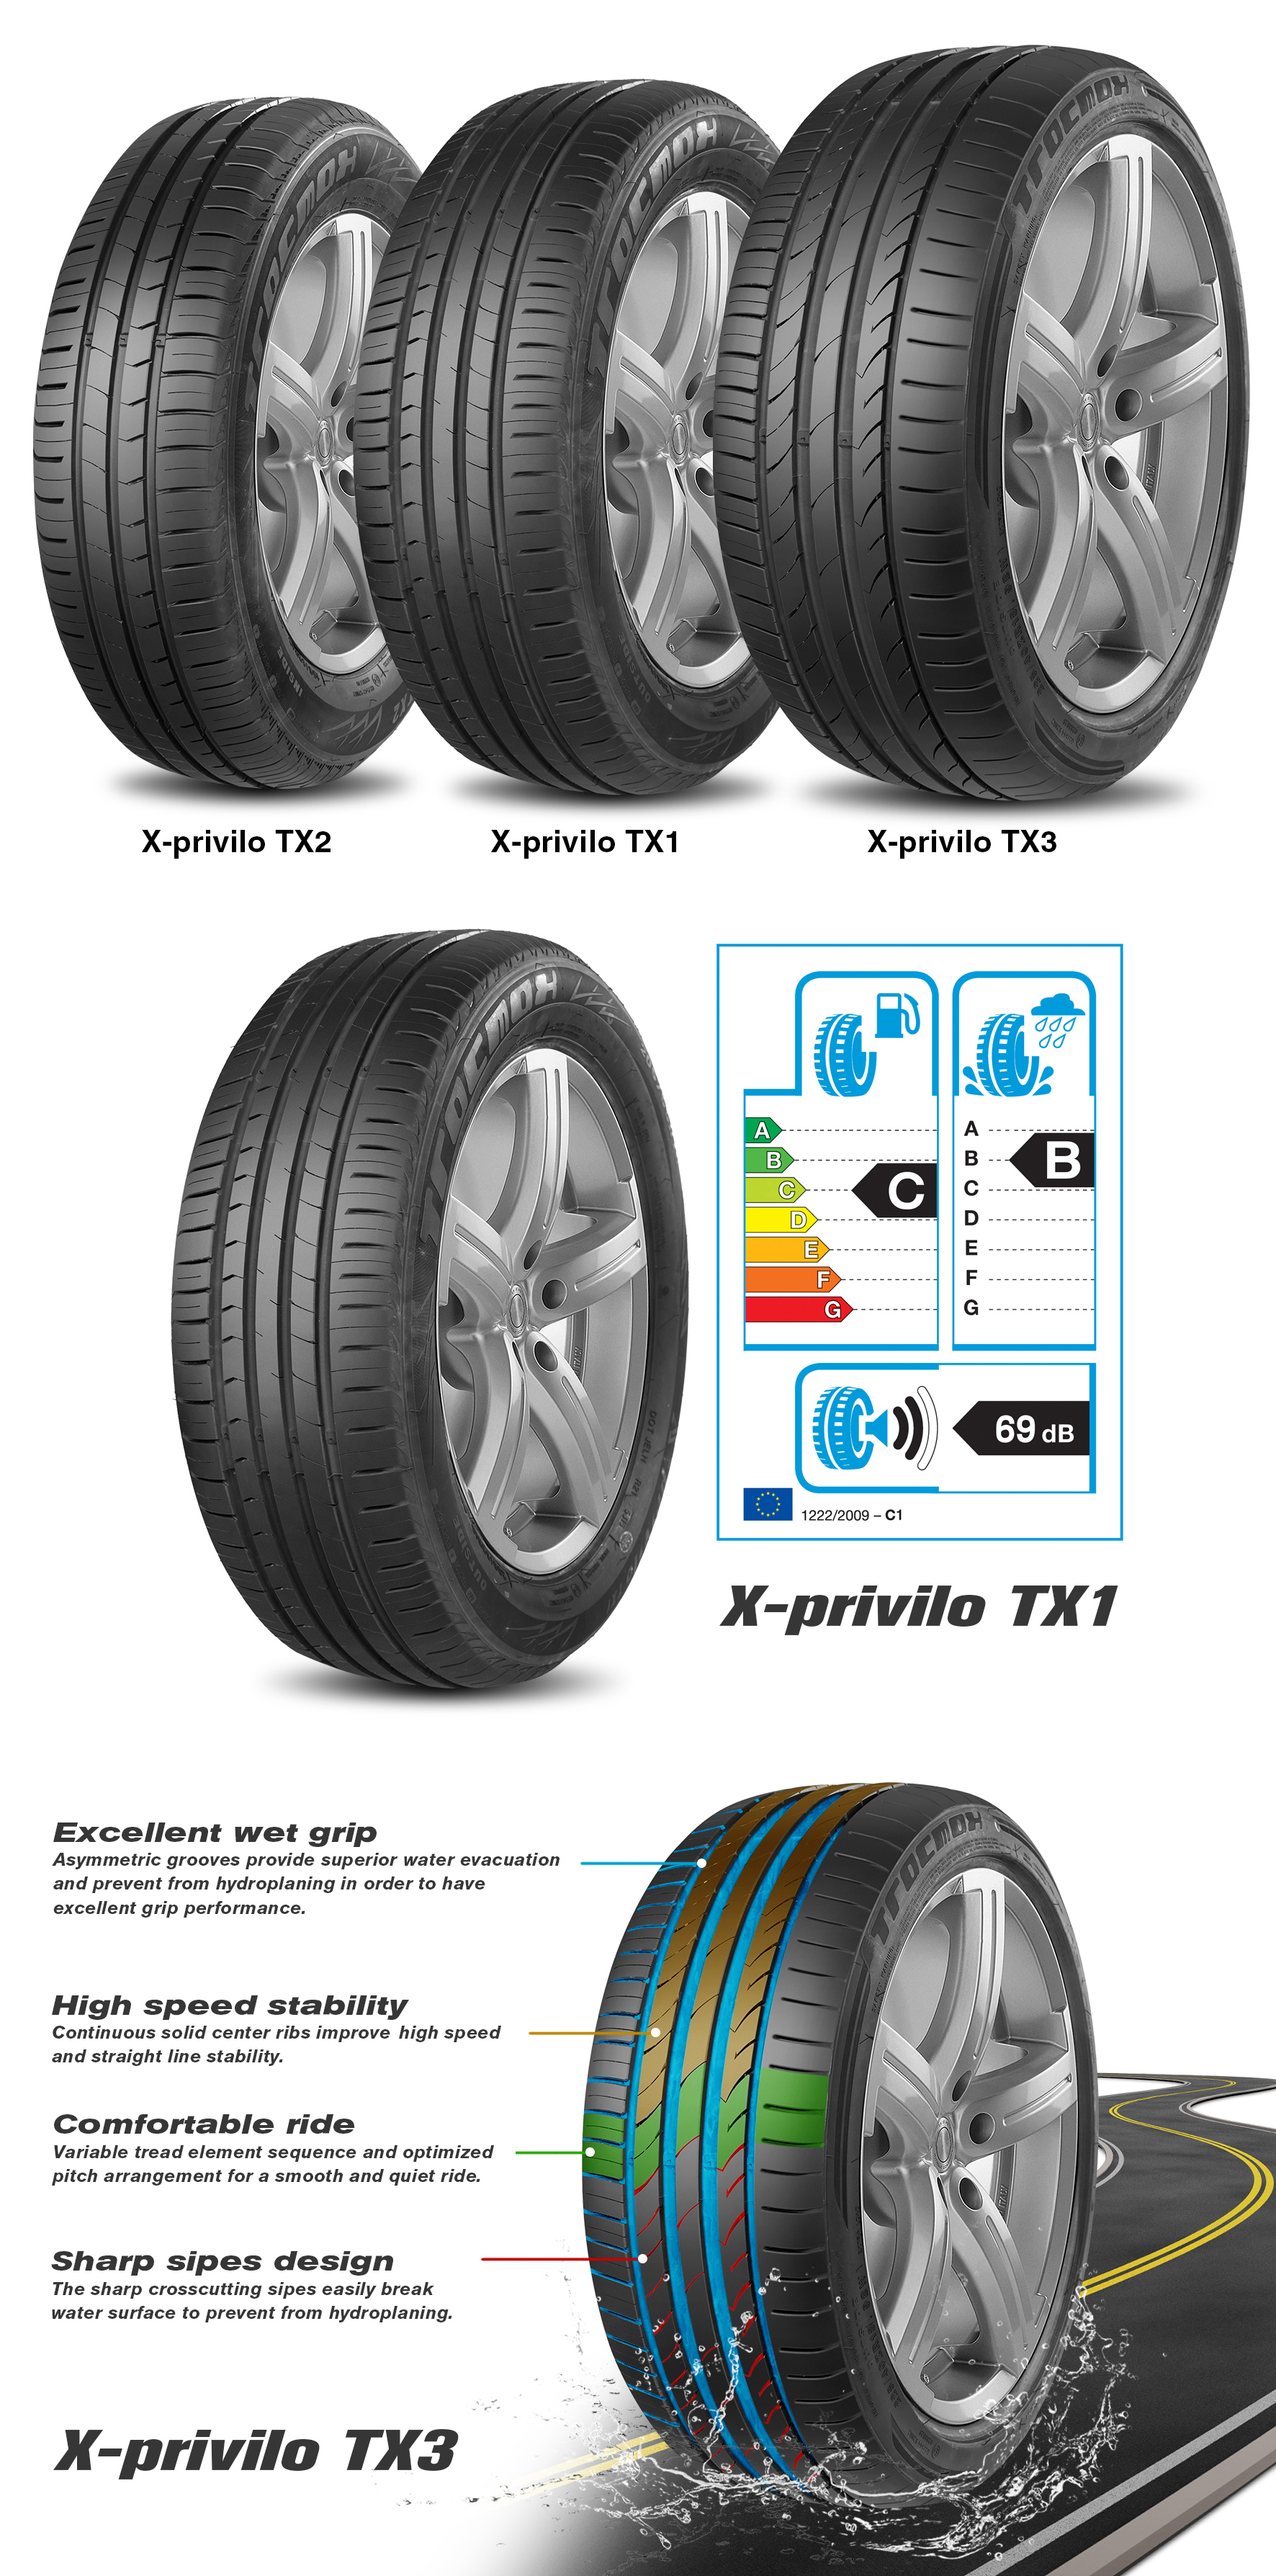 Tracmax launches new X-privilo series Tyrepress 